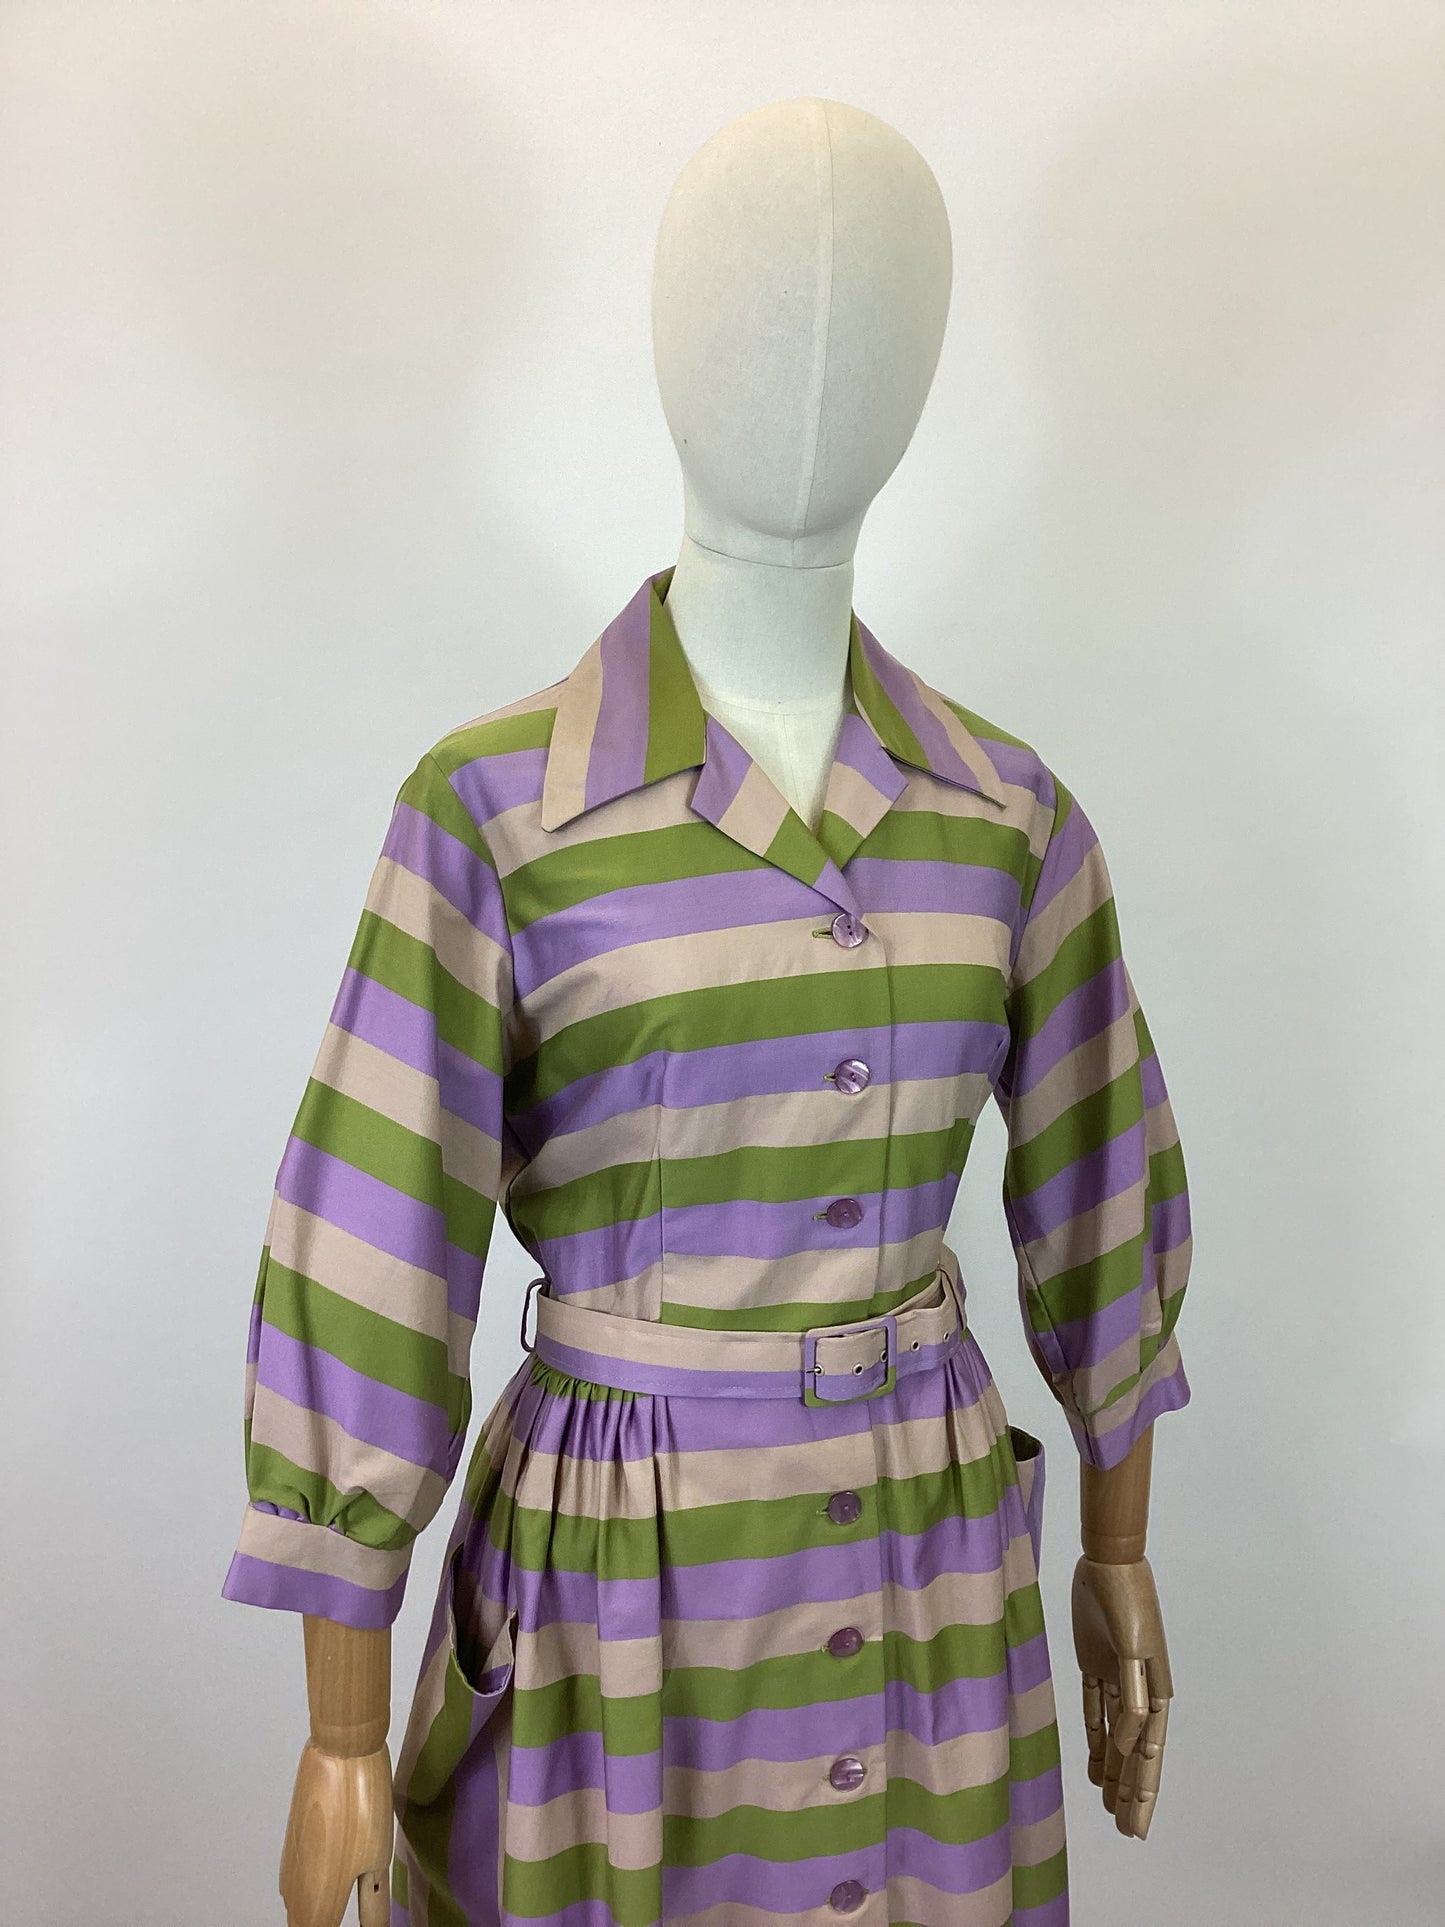 Original 1950’s Beautiful Shirtwaister dress - striped lilac, green and mushroom colourway